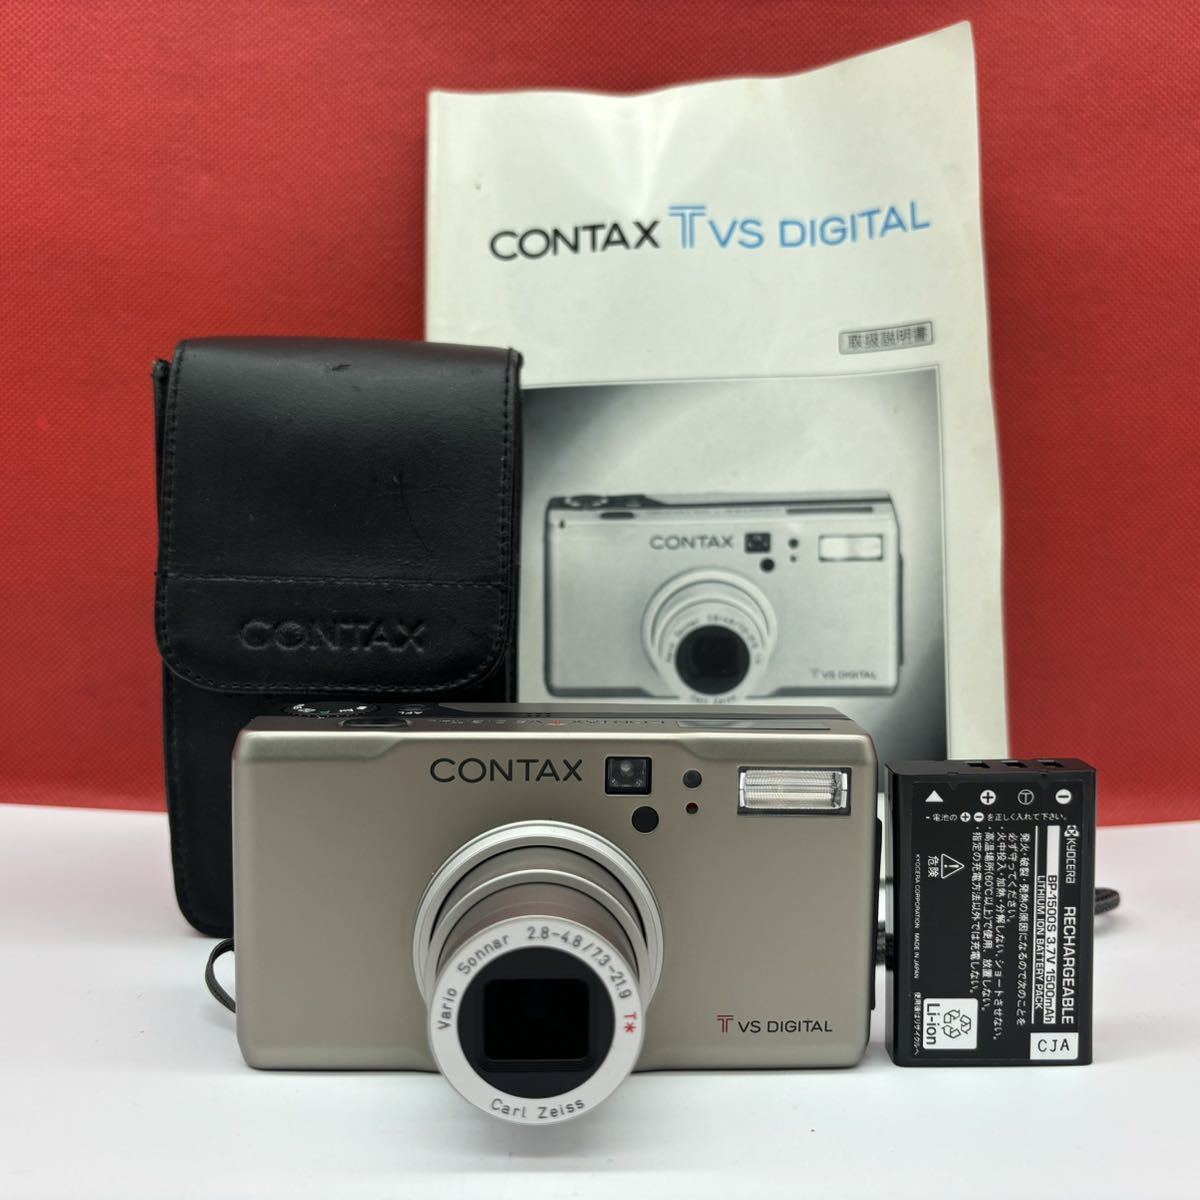 CONTAX TVS DIGITAL コンパクトデジタルカメラ Vario Sonnar 2.8-4.8